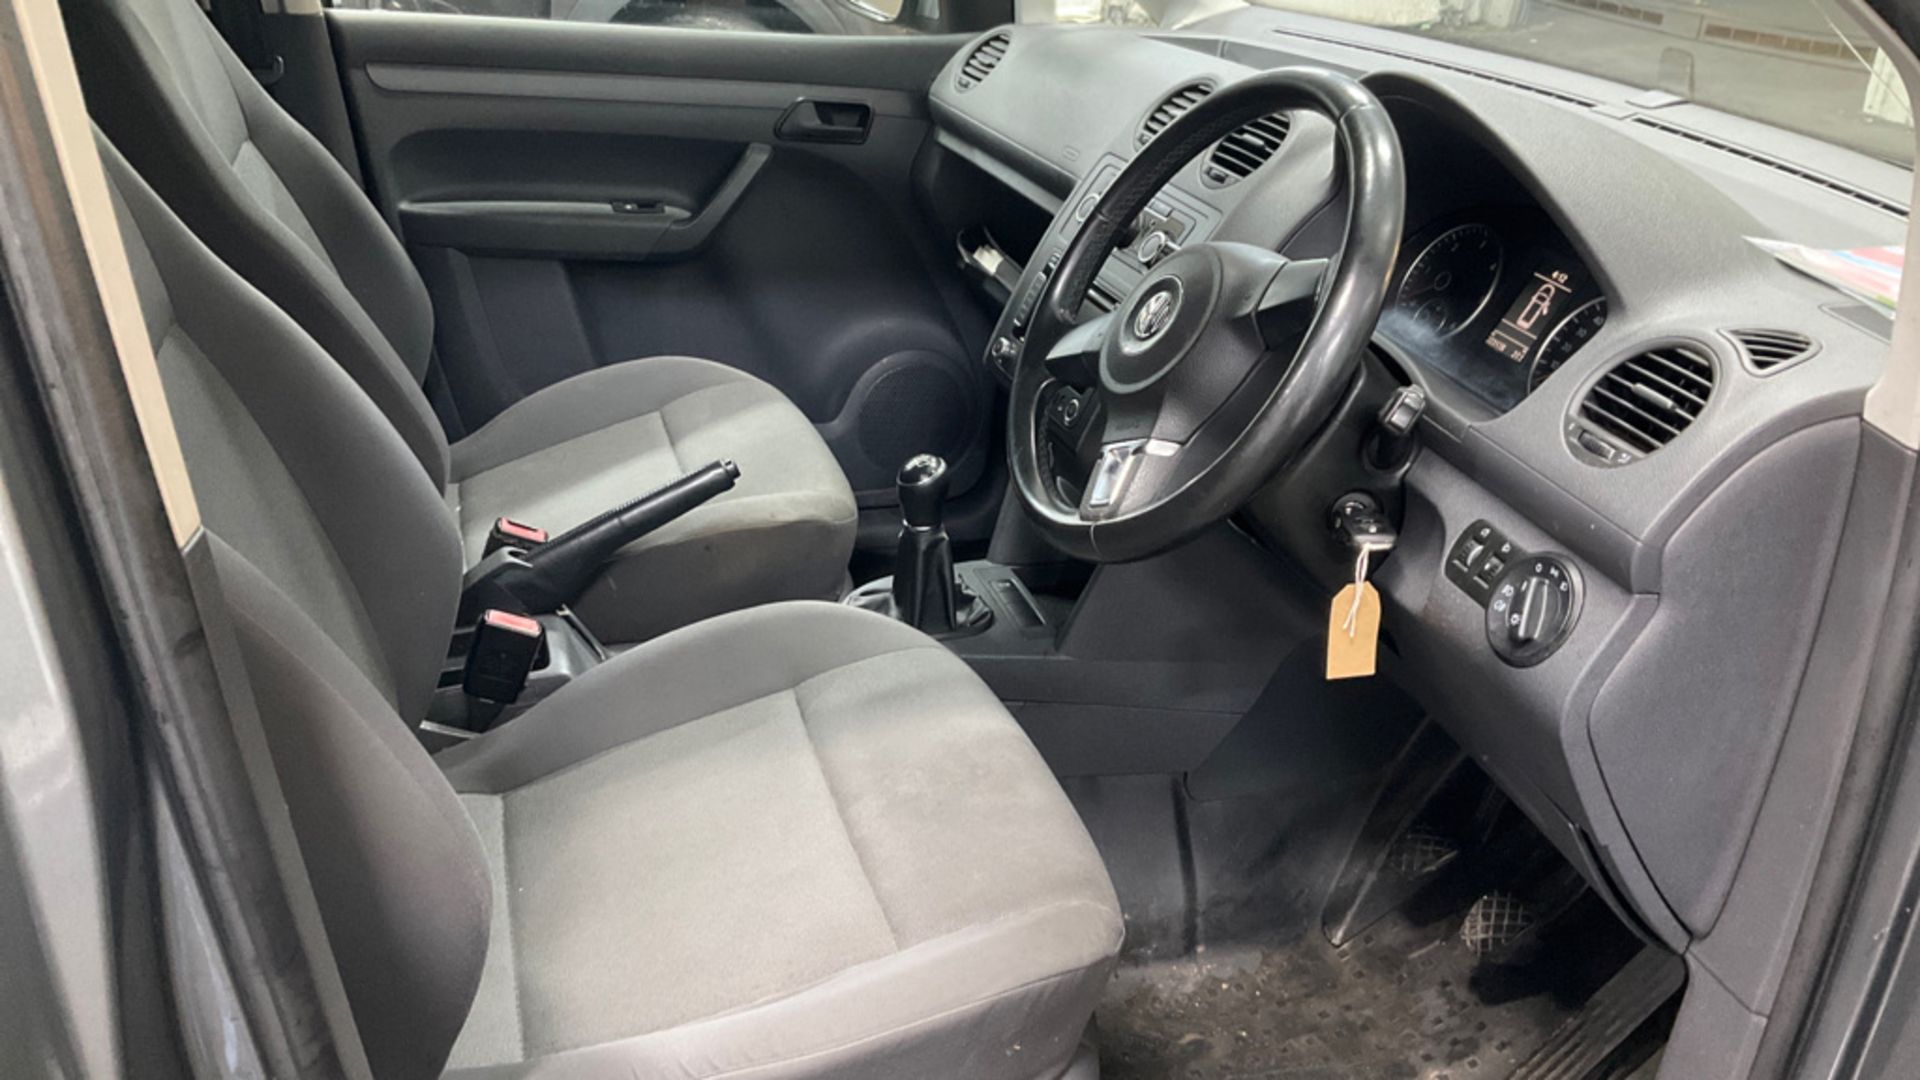 ** ON SALE ** Volkswagen Caddy Maxi C20 1.6 TDI HighLine 102 2014 '14 Reg' Sat Nav - A/C - Panel Van - Image 7 of 9